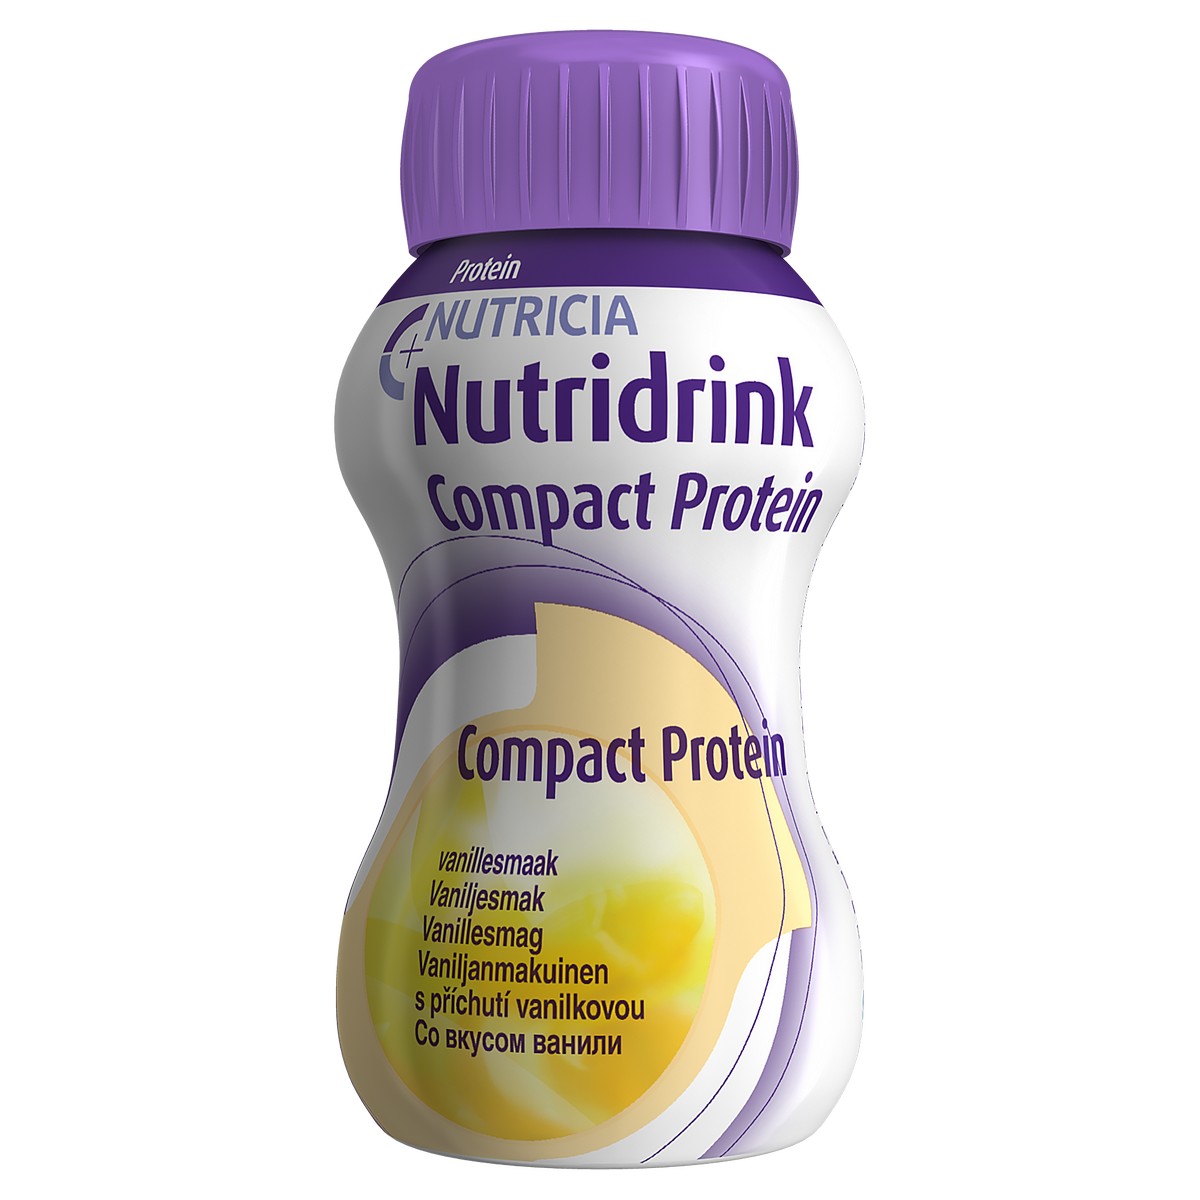 Нутридринк Компакт Протеин со вкусом ванили, 4 штуки по 125 мл - Промедфарм